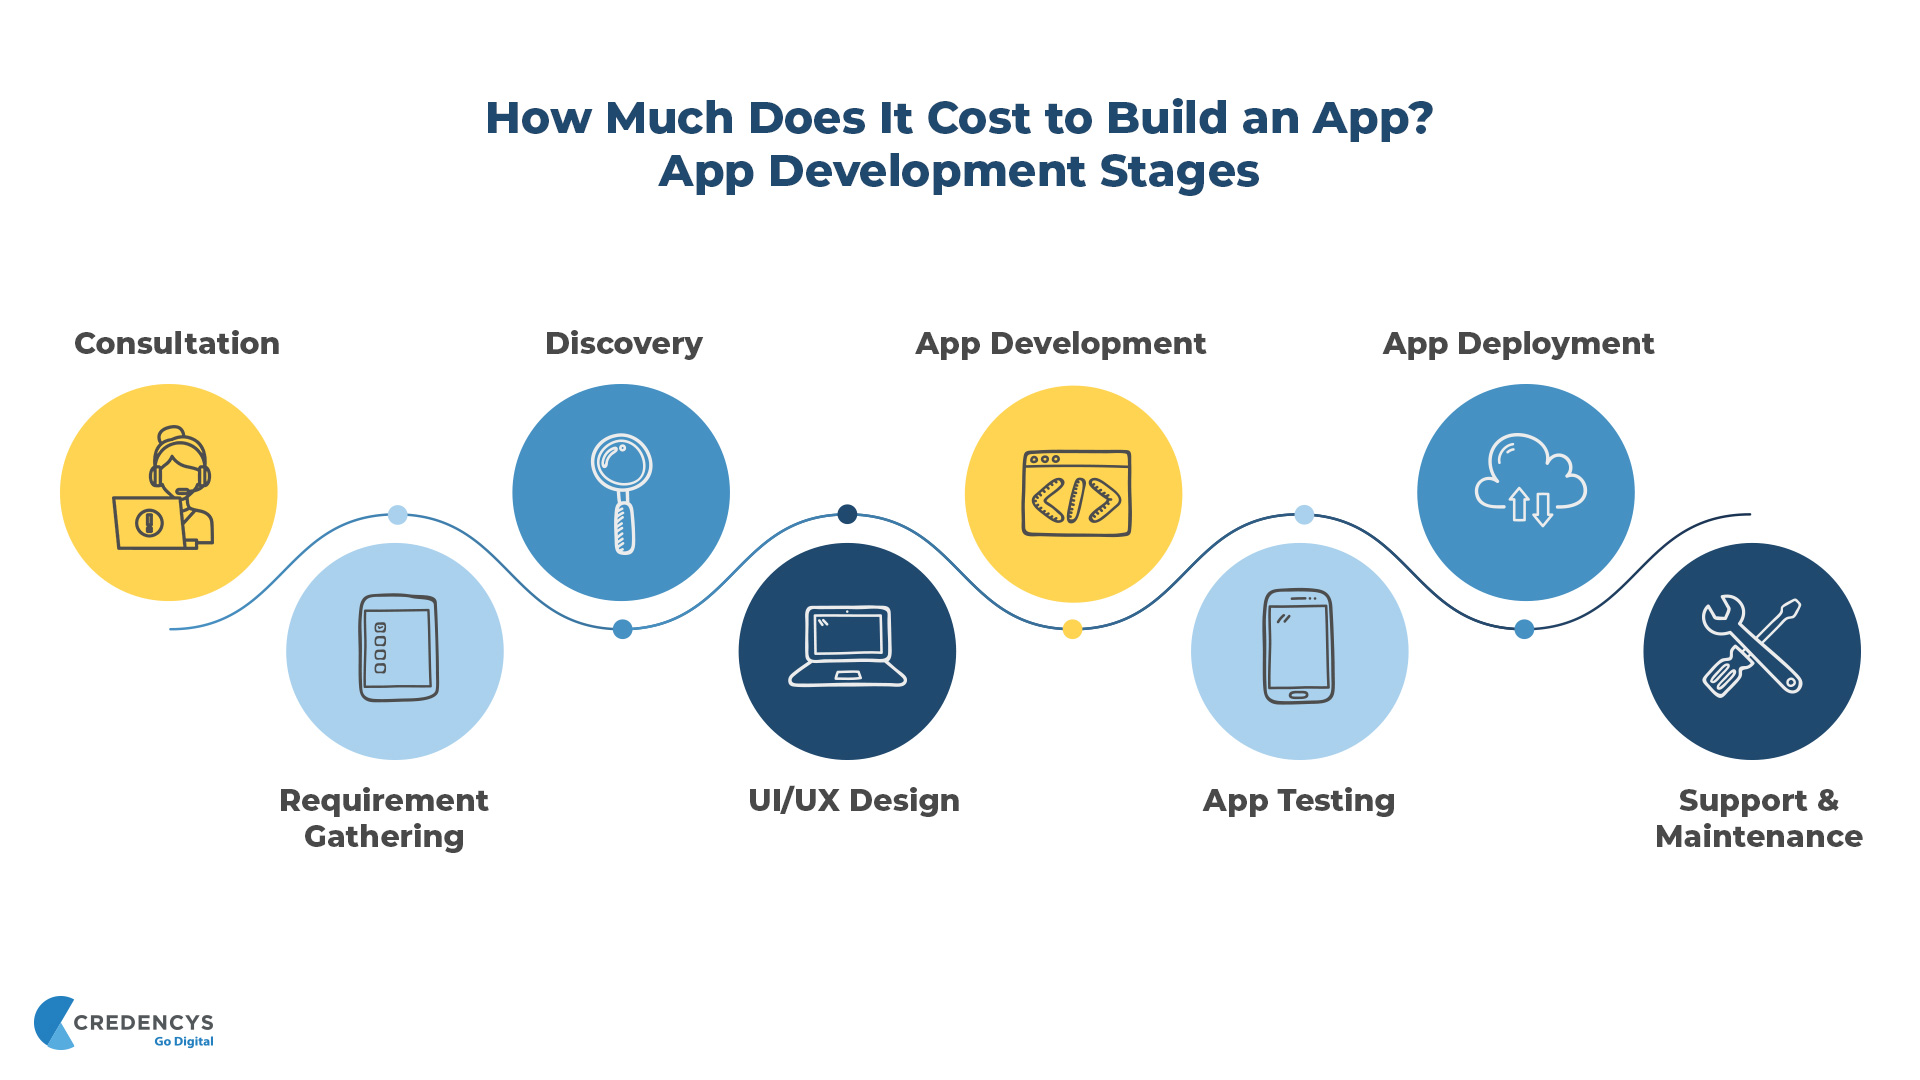 App Development Stages